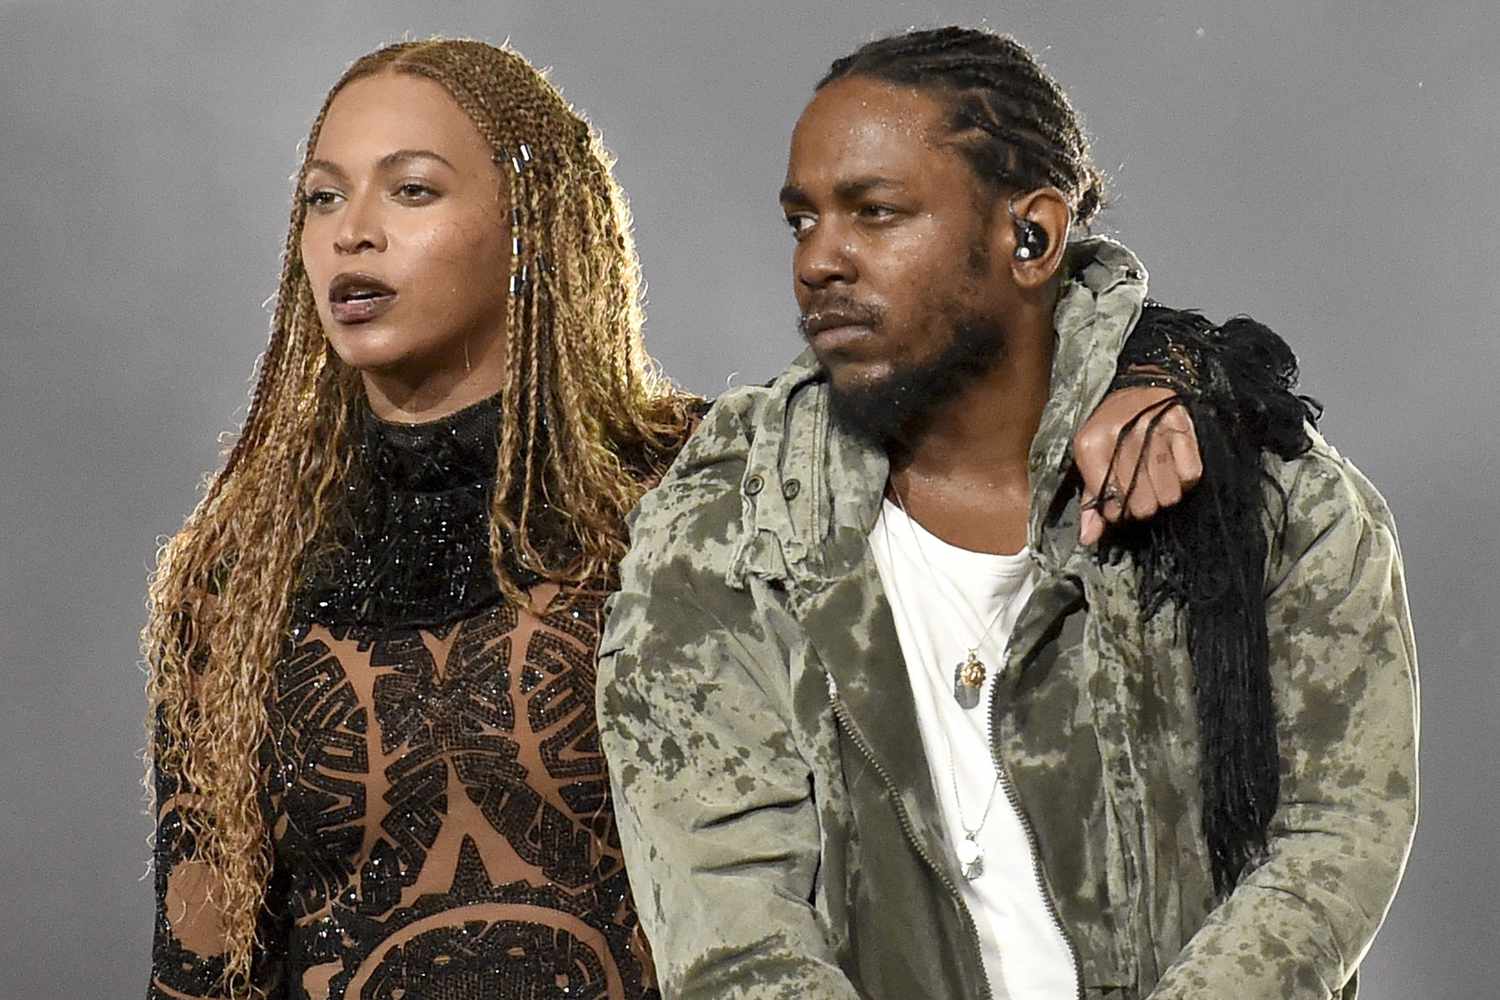 Kendrick Lamar and Martine Rose: brief history of their creative partnership